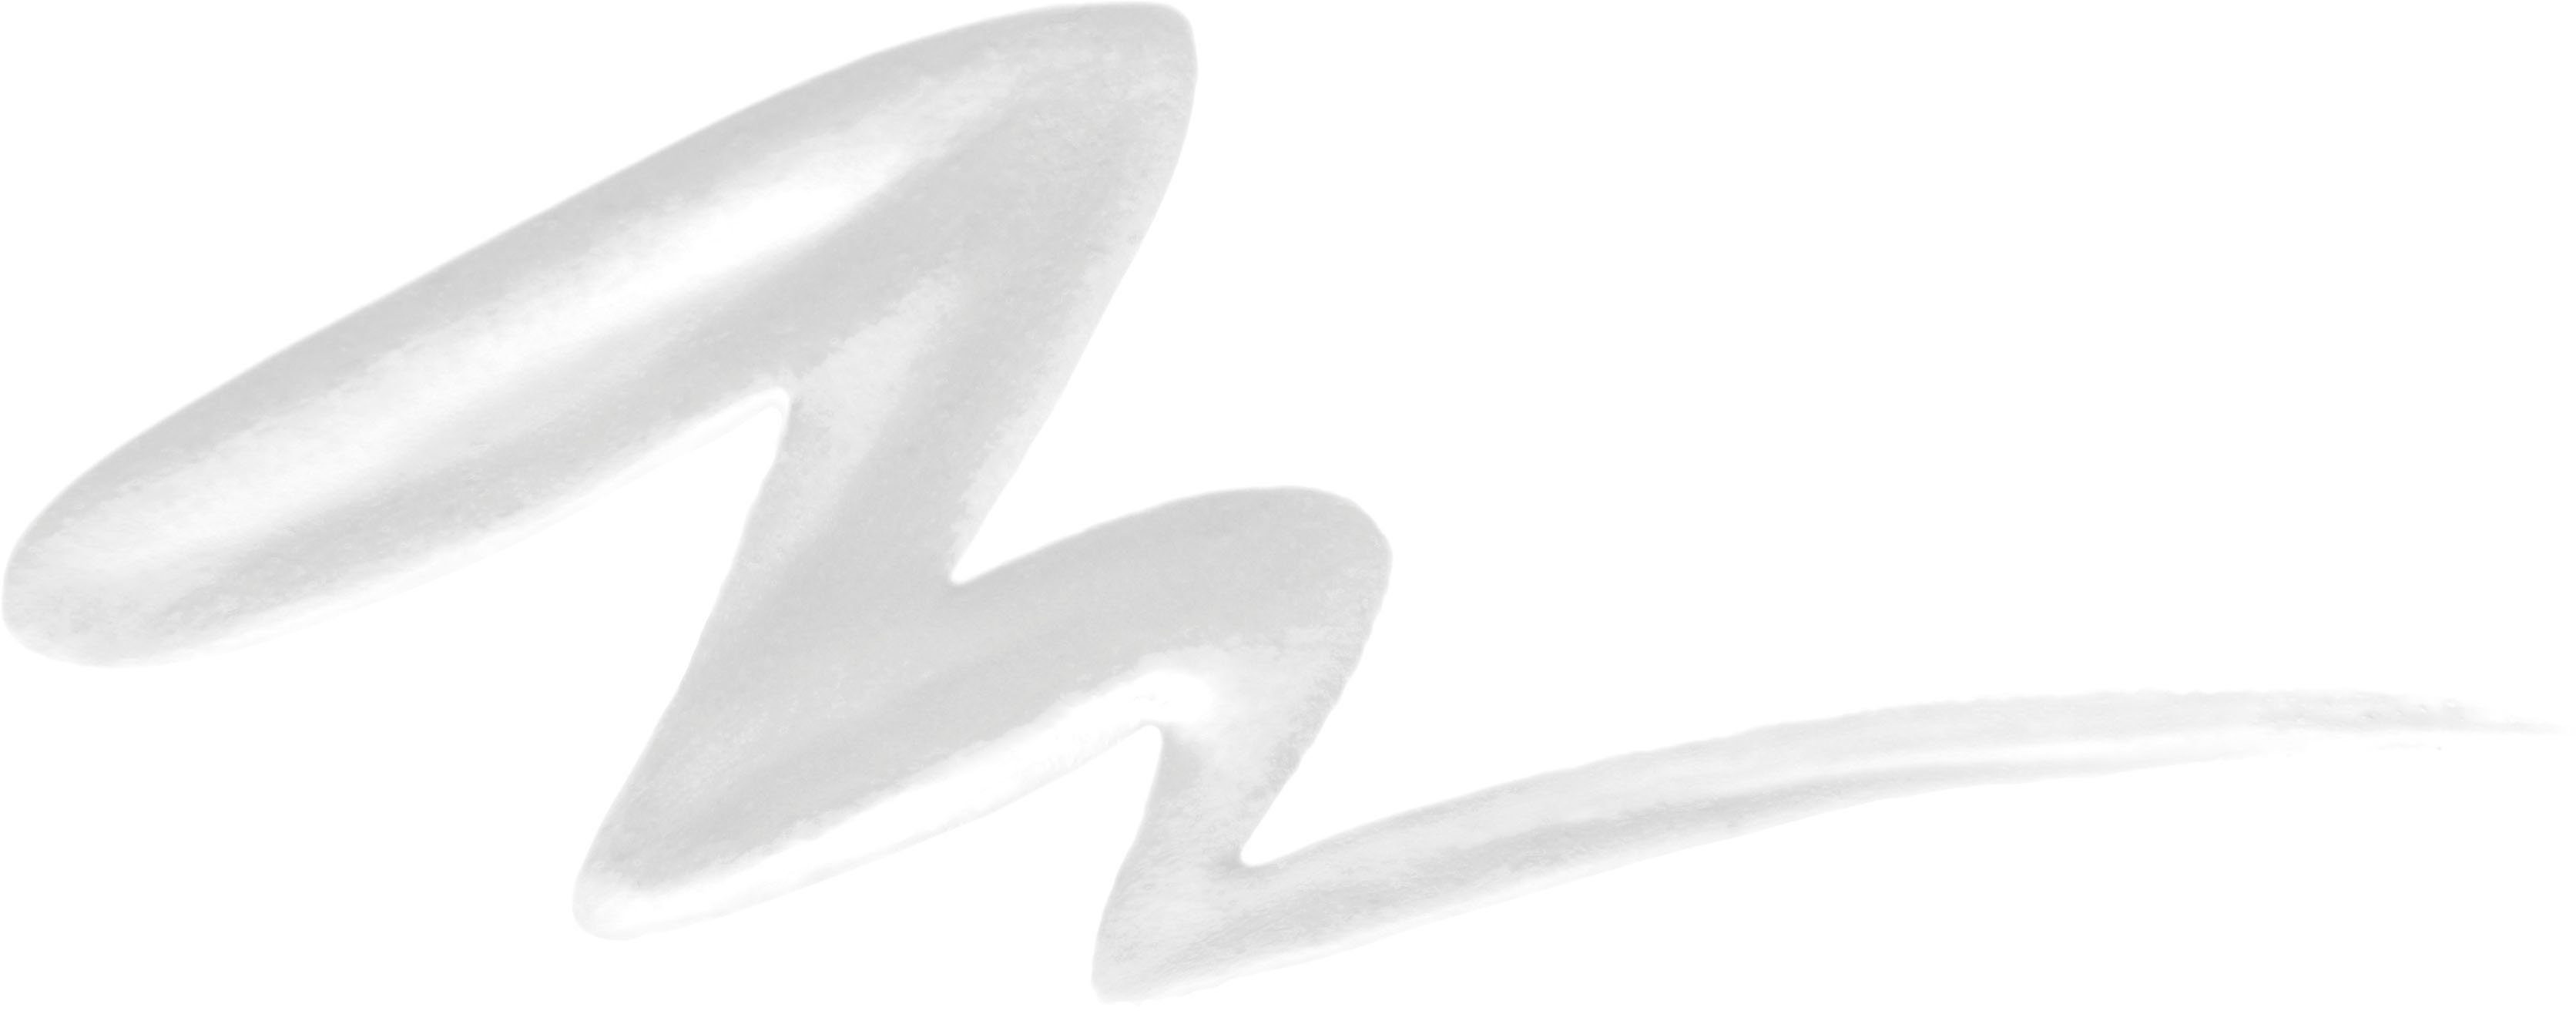 NYX Epic White Wear Eyeliner Waterproof Makeup Liquid Professional 04 Liner,